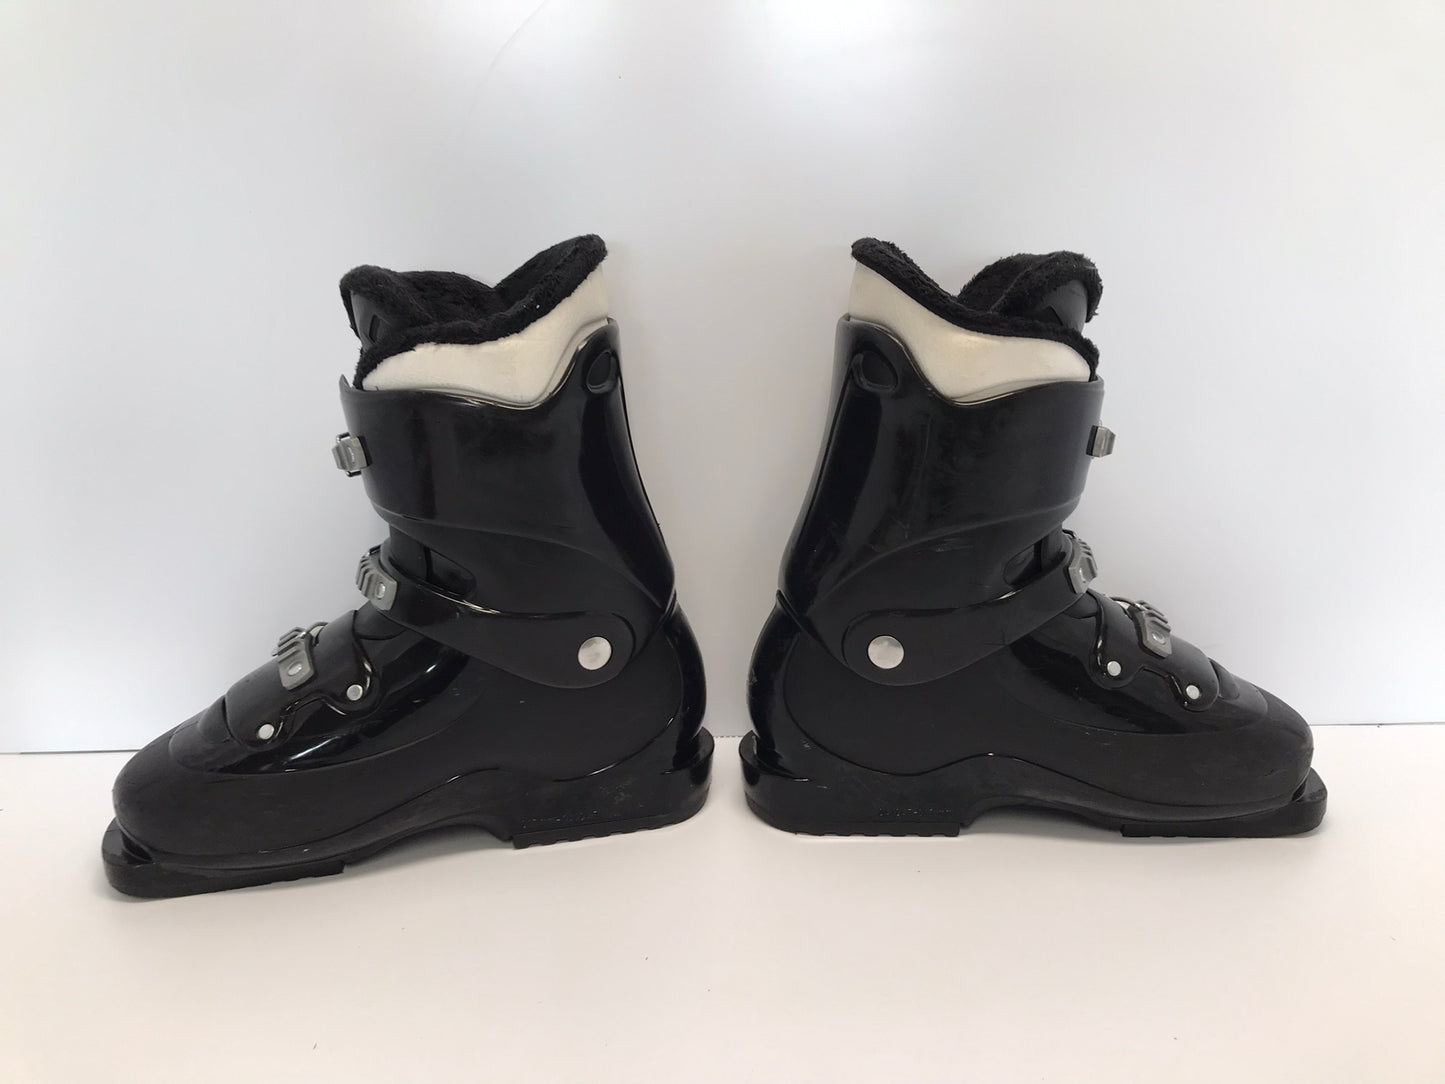 Ski Boots Mondo Size 24.5 Men's Size 6.5 Ladies Size 7.5 285 mm Salomon Black White Like New